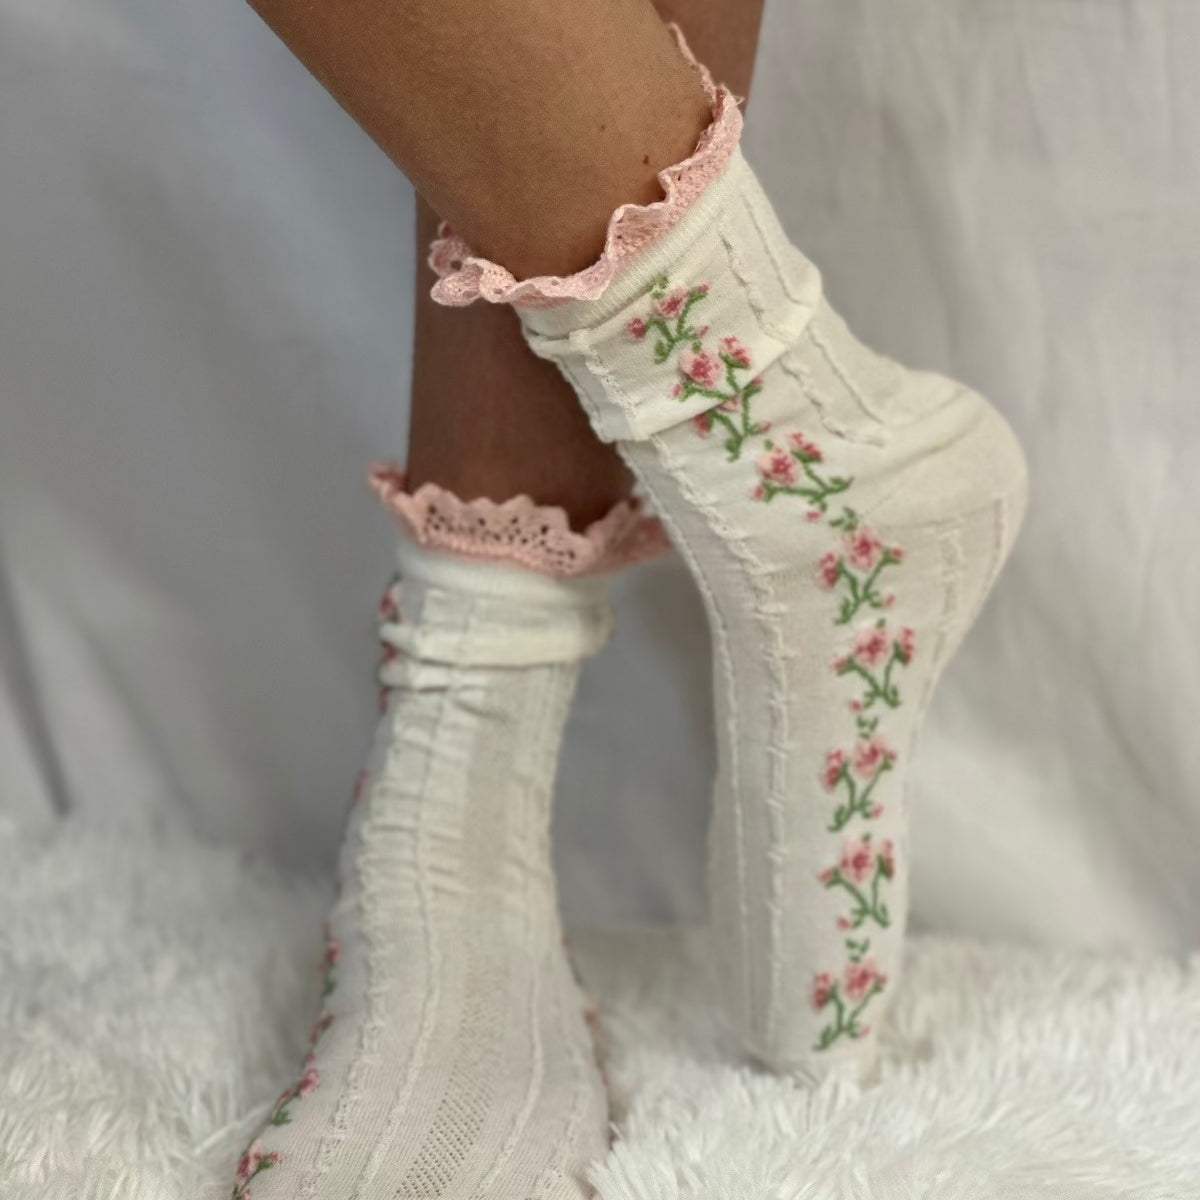 garden party lace topped pink feminine socks women, best quality lace ankle socks.